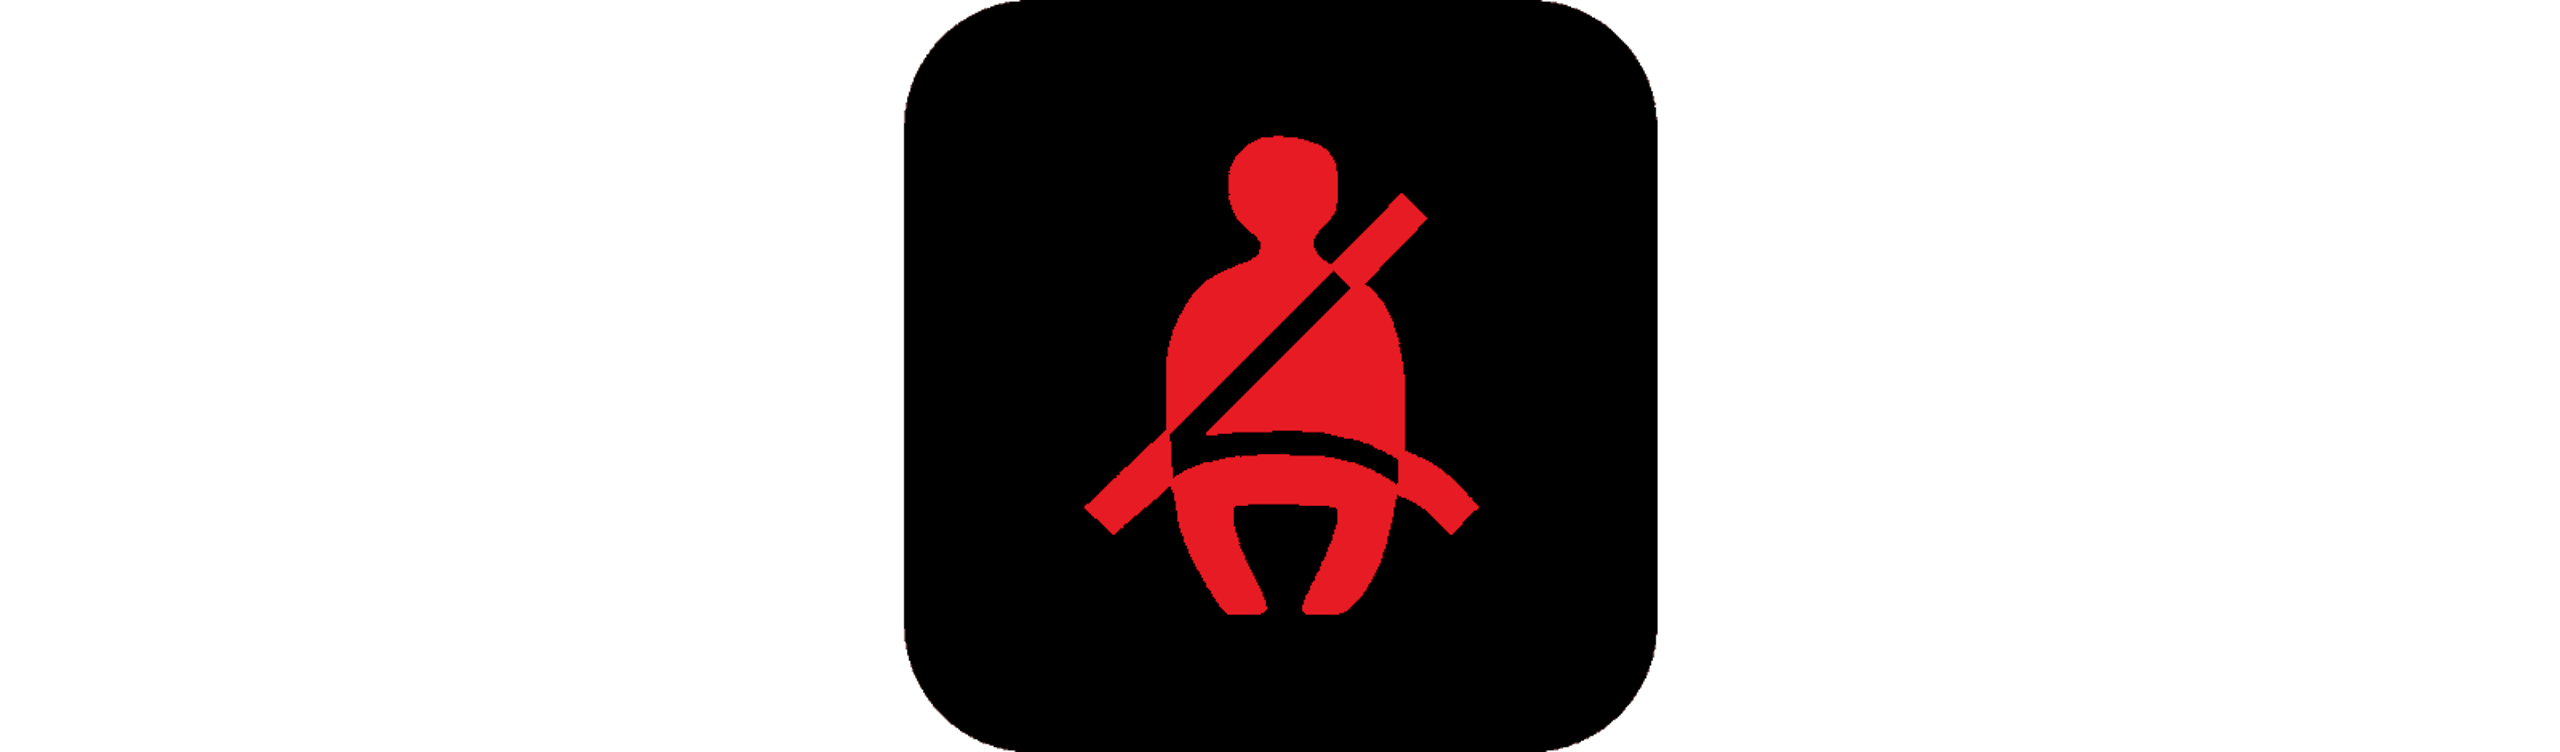 seat belt indicator light on a black background